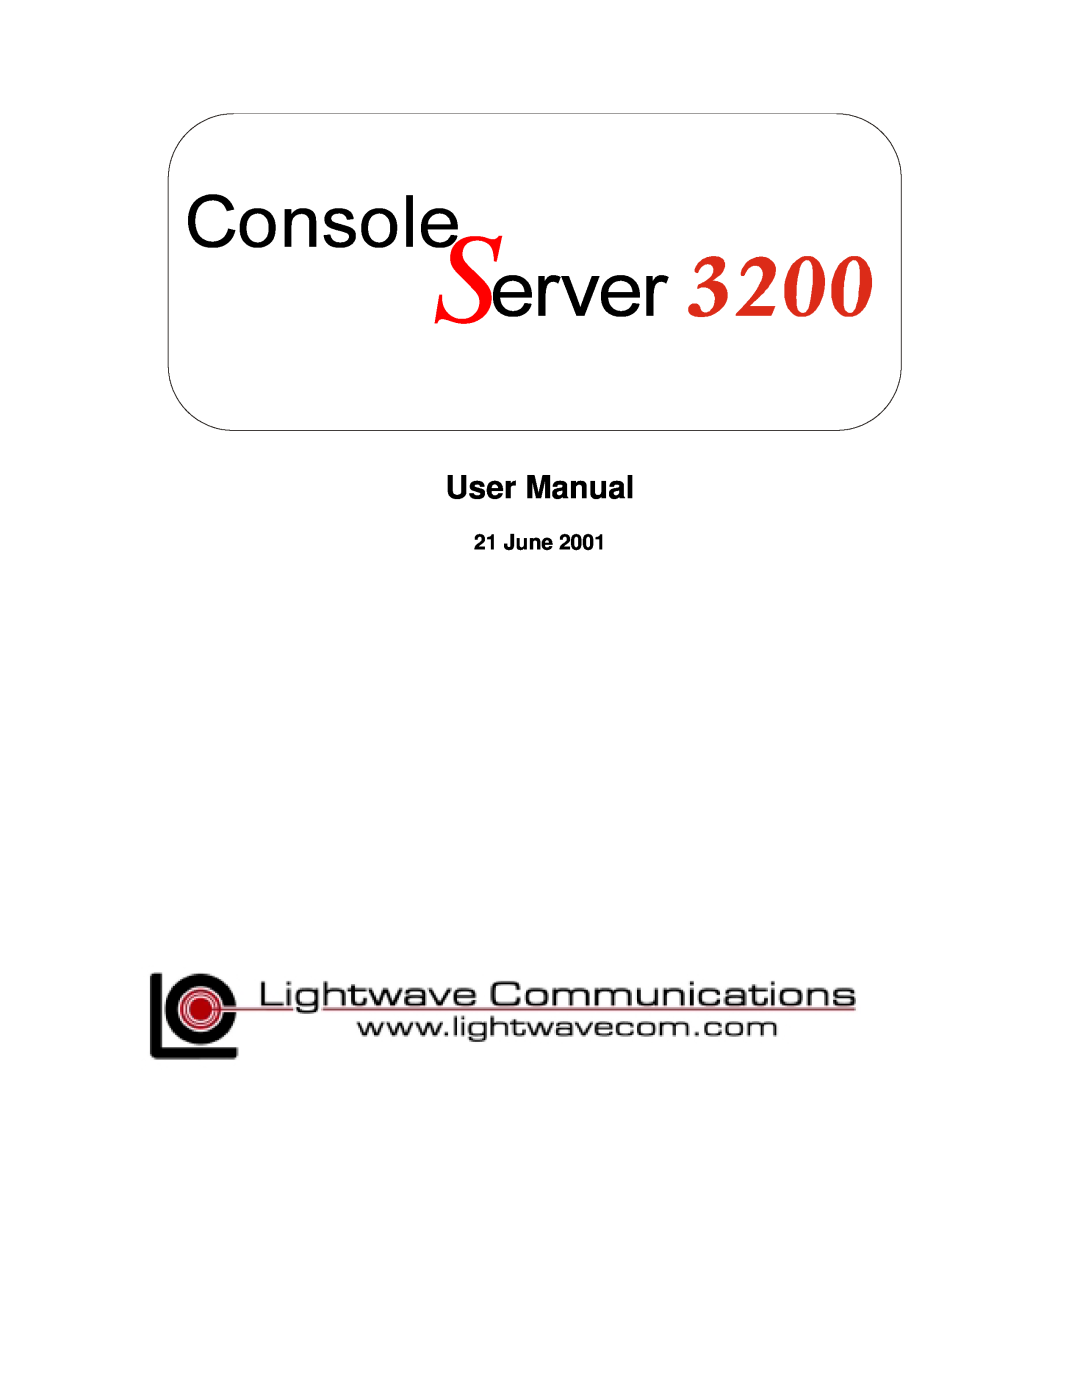 Lightwave Communications 3200 user manual June, ConsoleServer, User Manual 